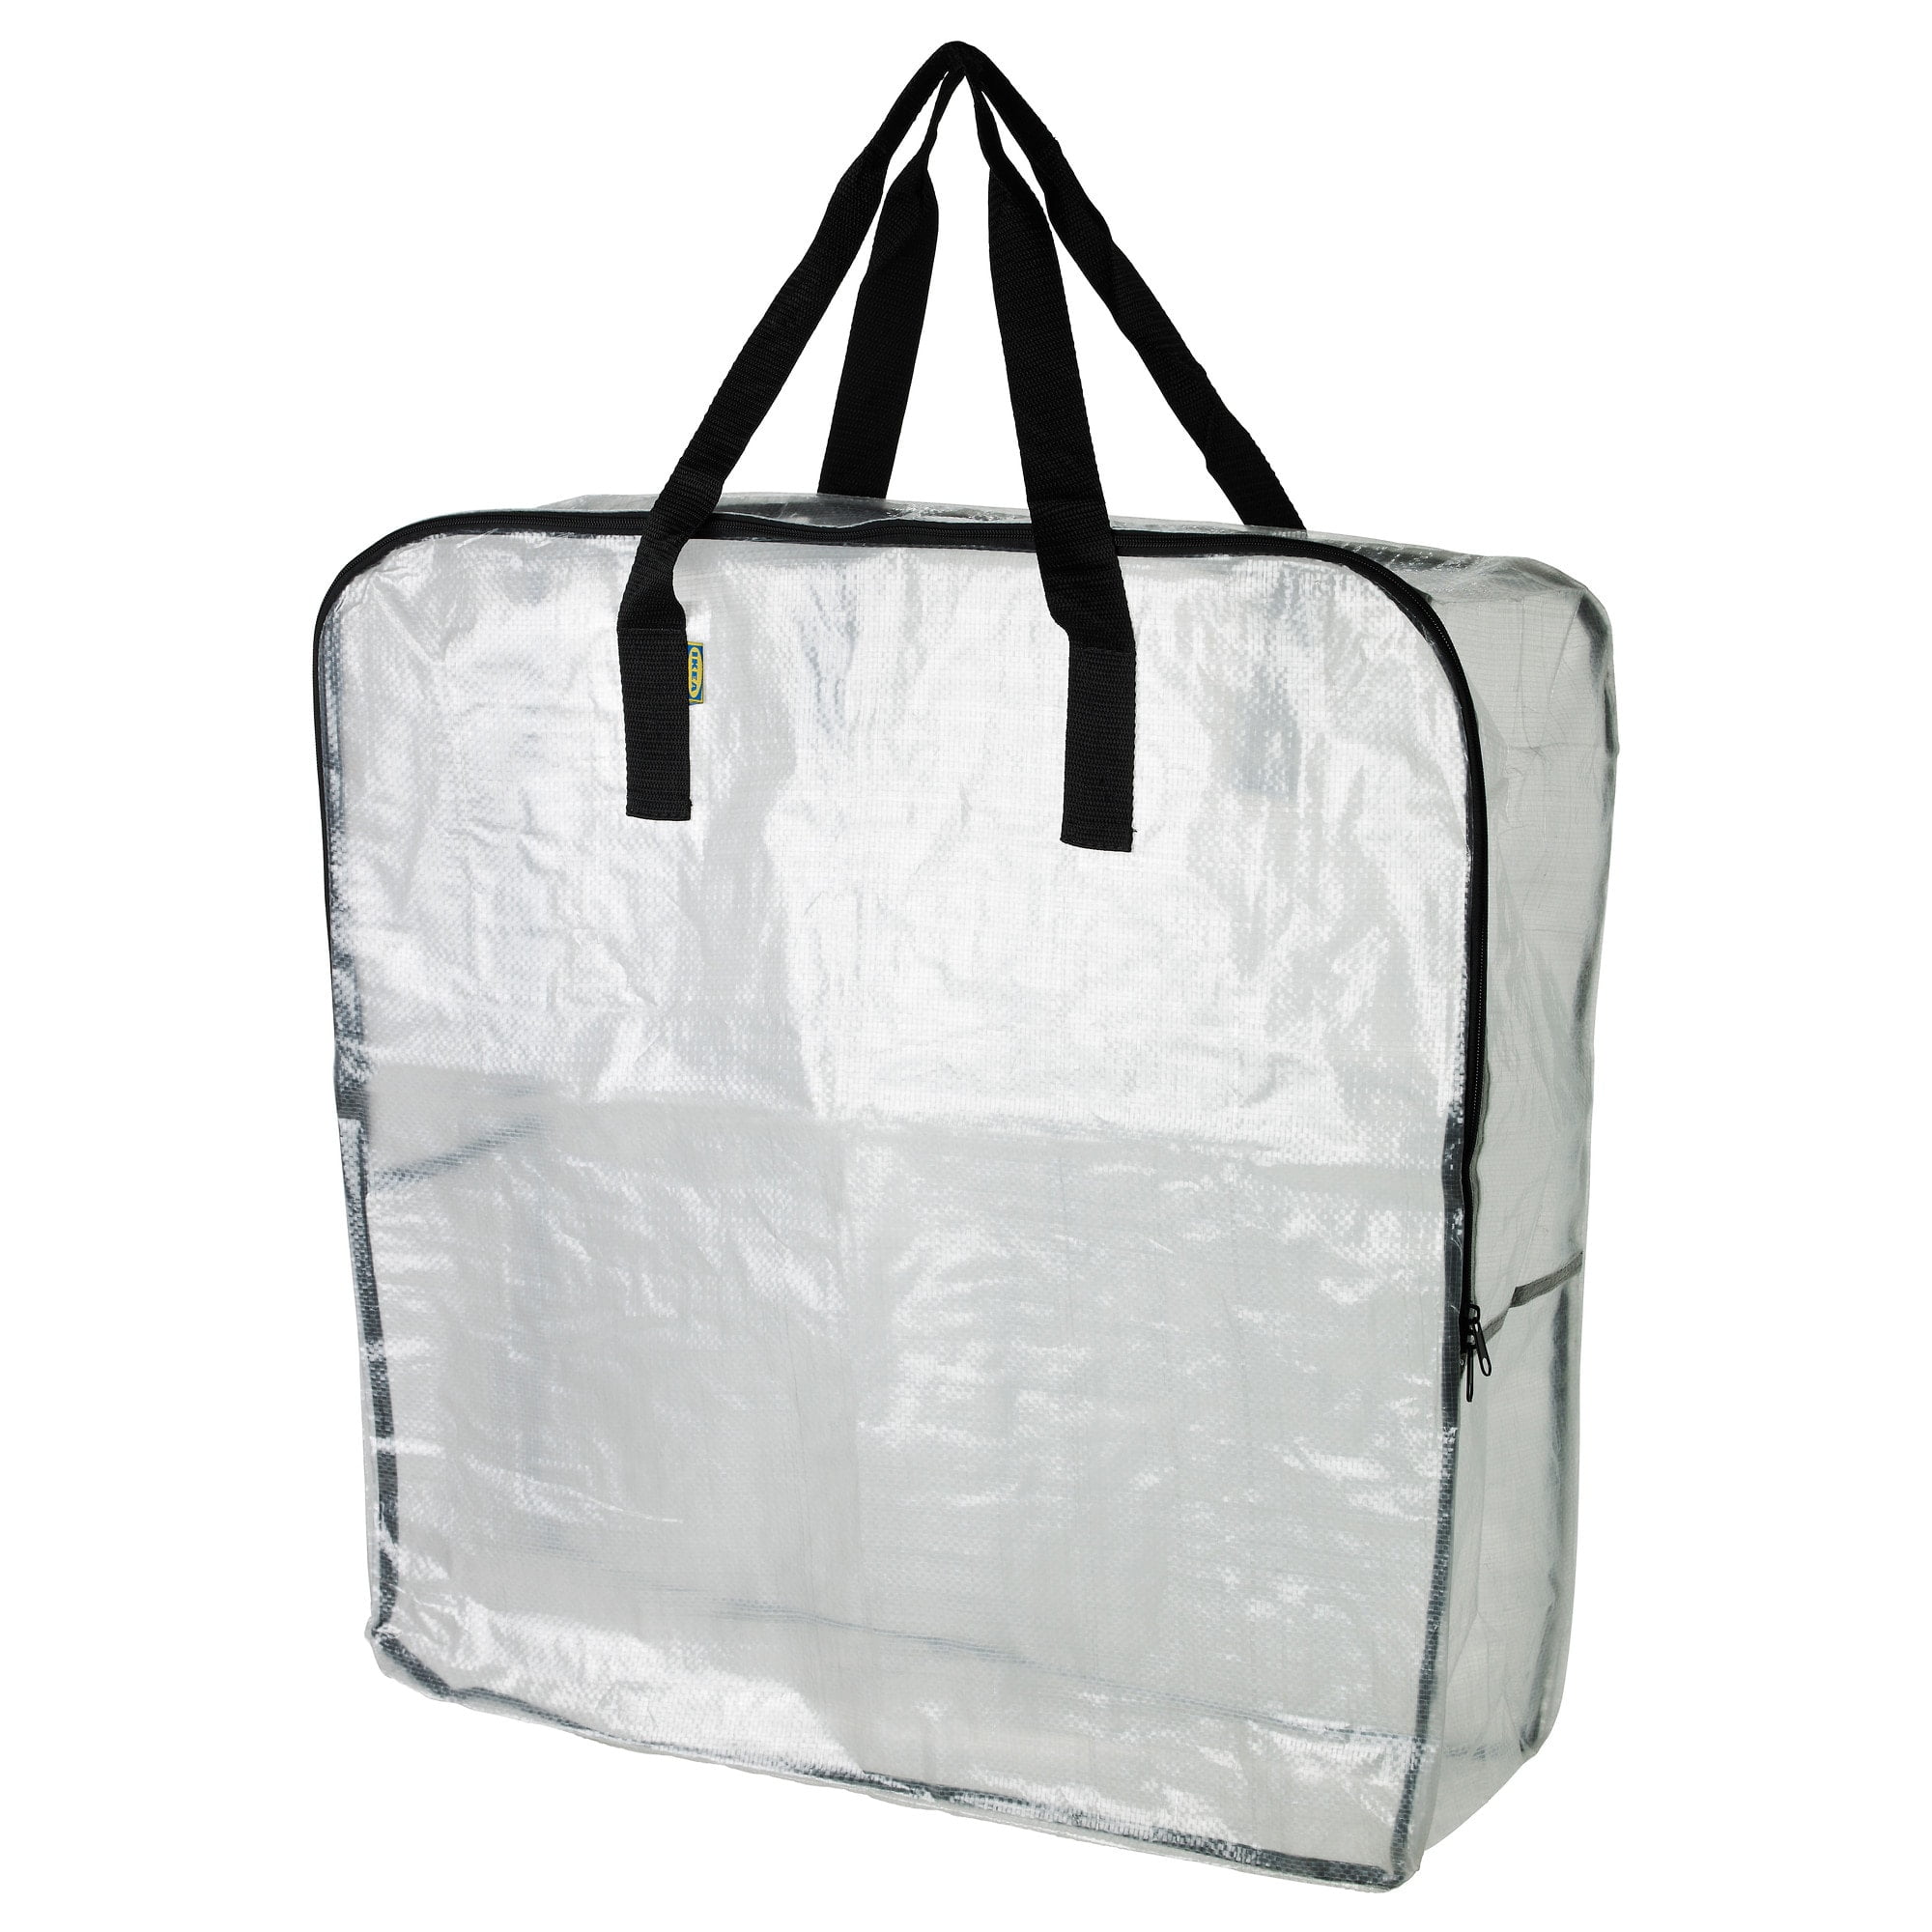 2 x IKEA DIMPA Large Clear Transparent Plastic Zipped Storage Bags 